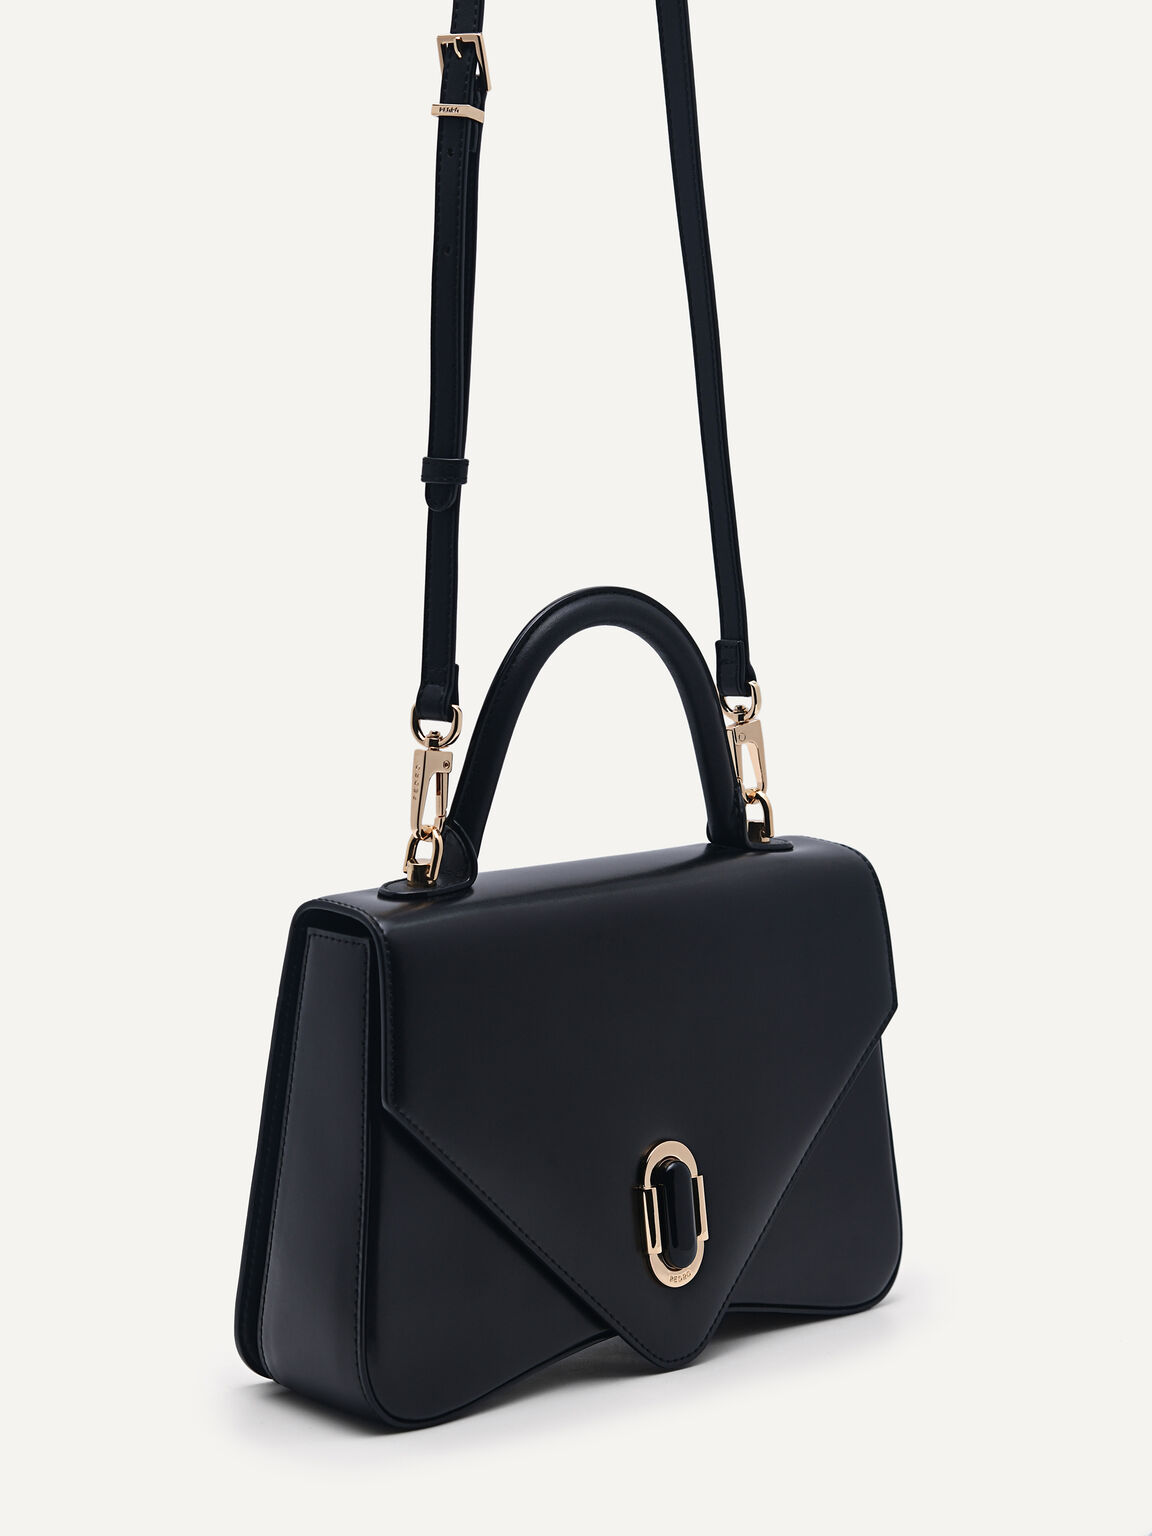 Zenith Leather Handbag, Black